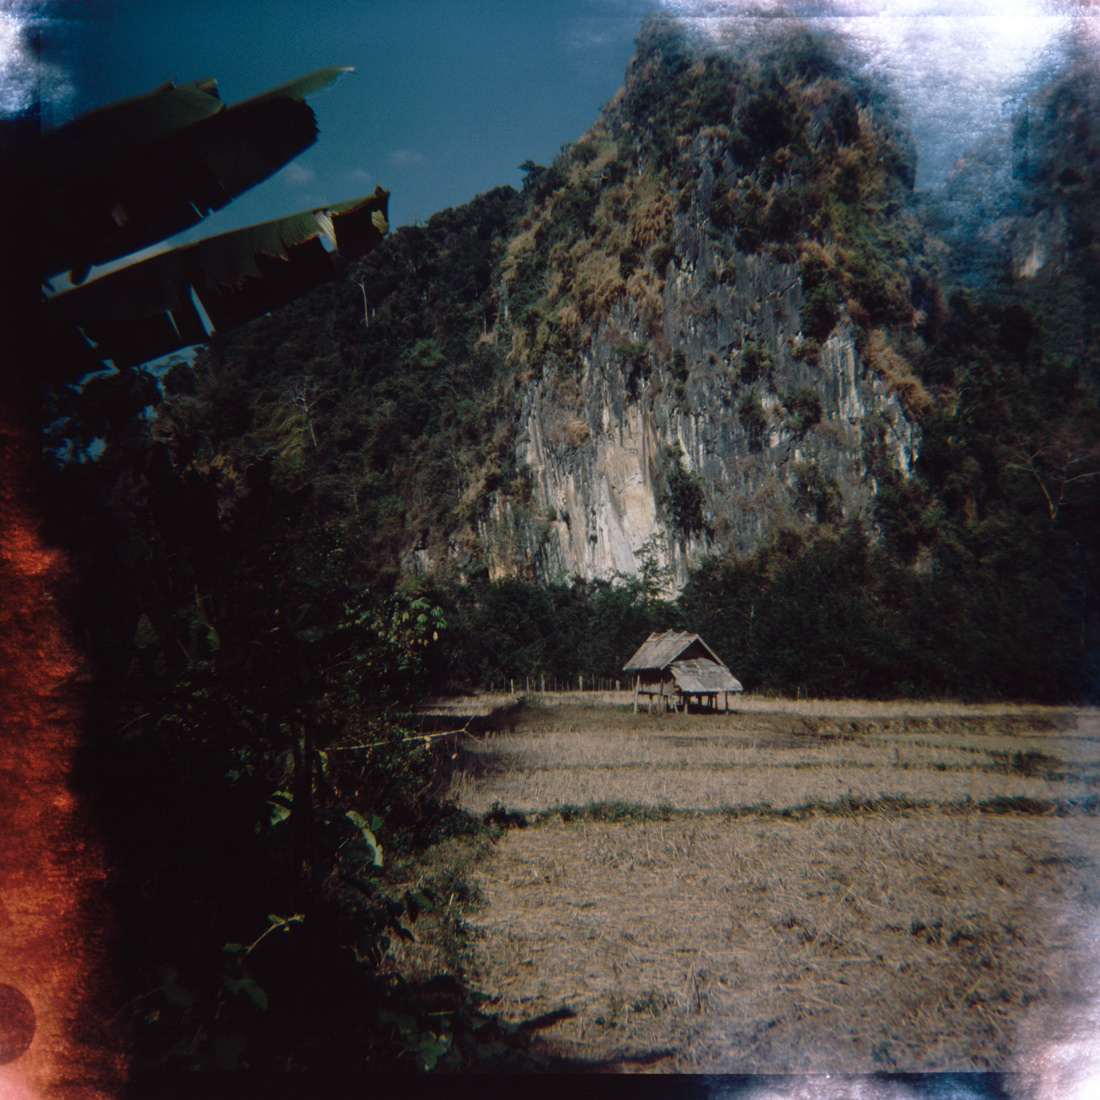 asia Thailand Laos Travel Landscape lomo Lomography Diana F